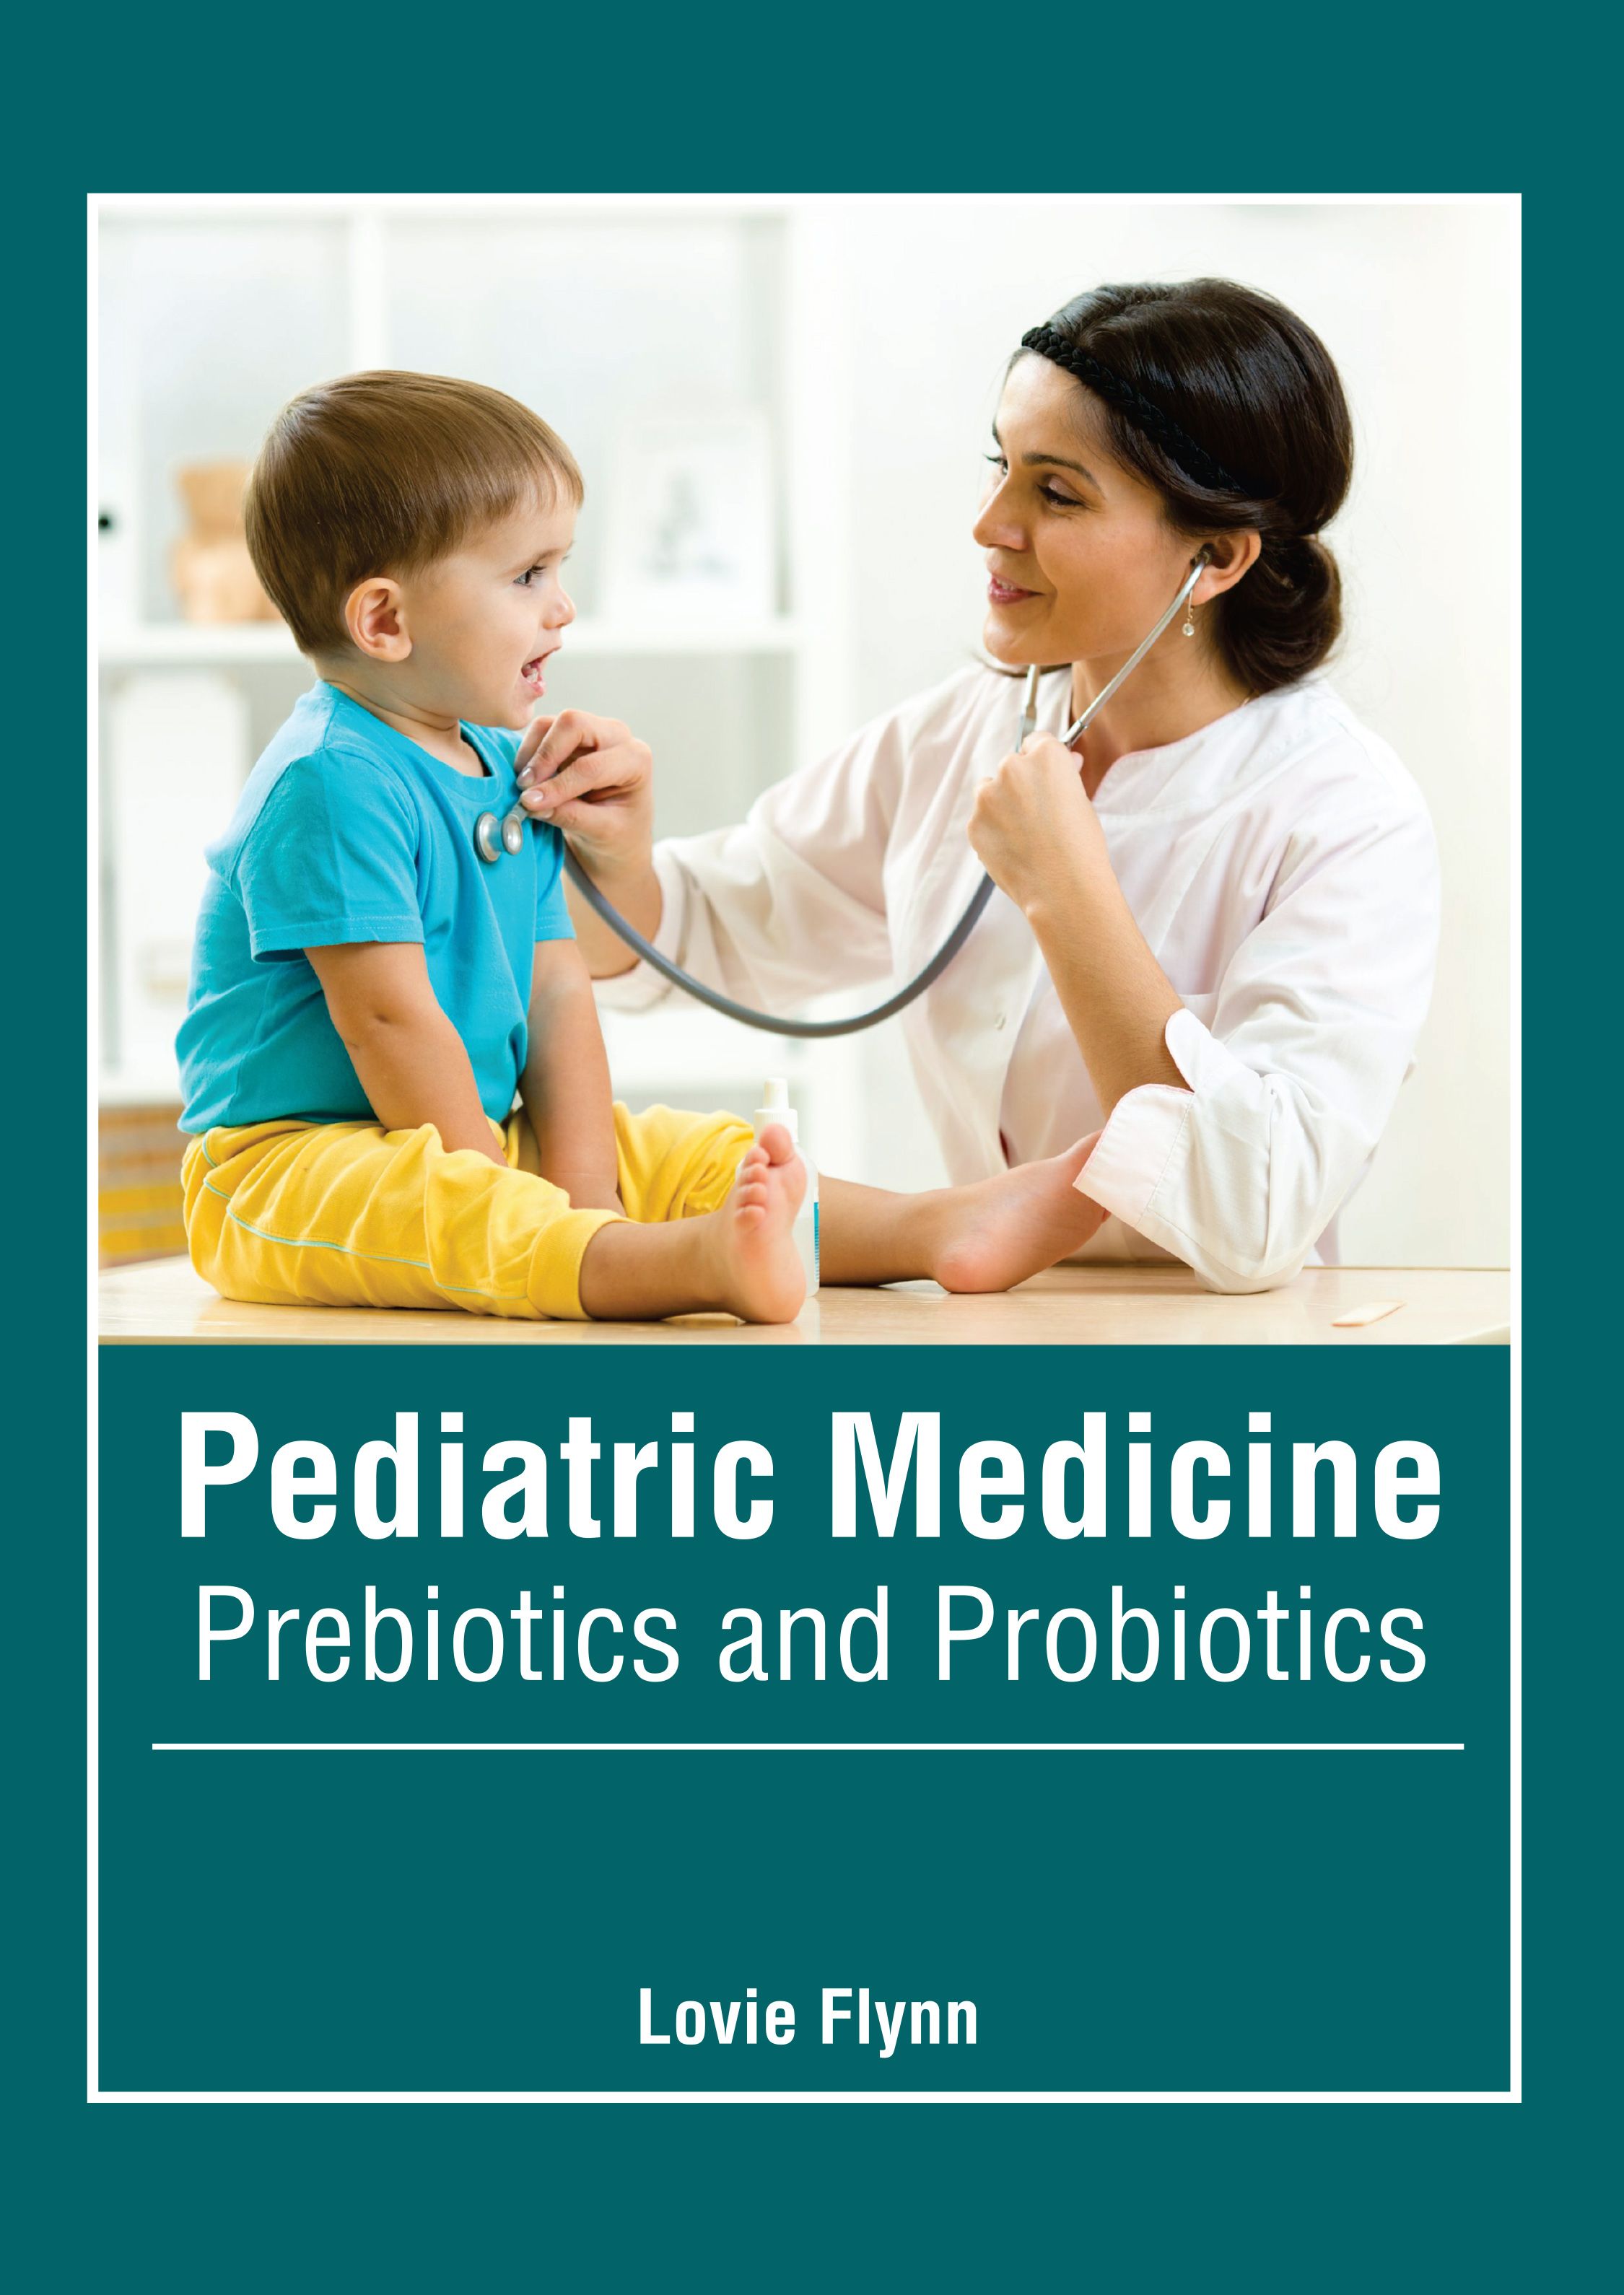 PEDIATRIC MEDICINE: PREBIOTICS AND PROBIOTICS